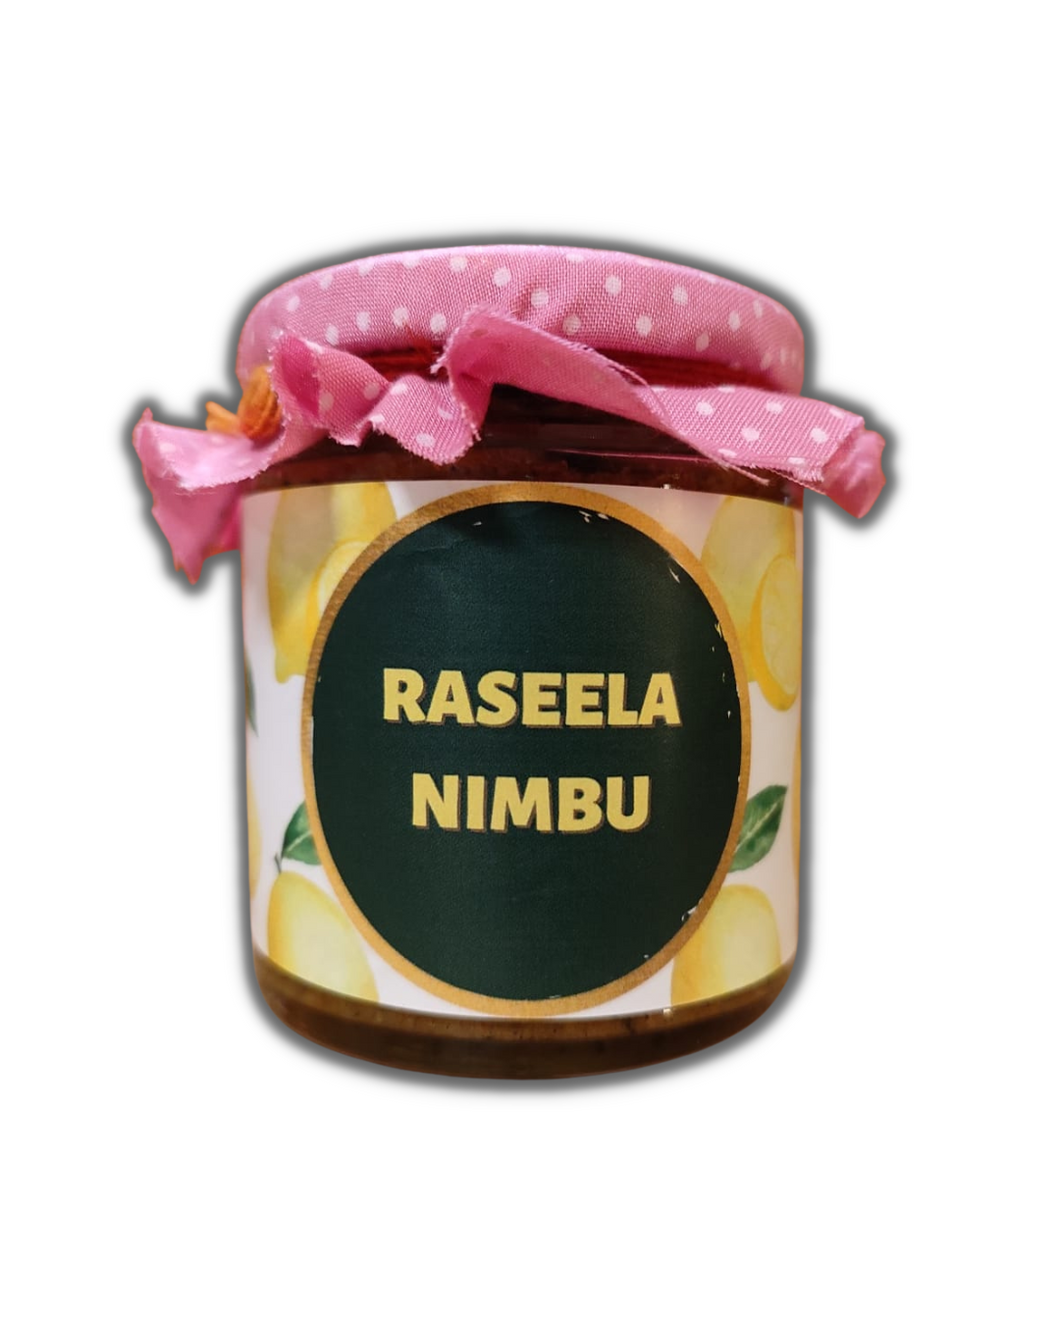 Raseela Nimbu